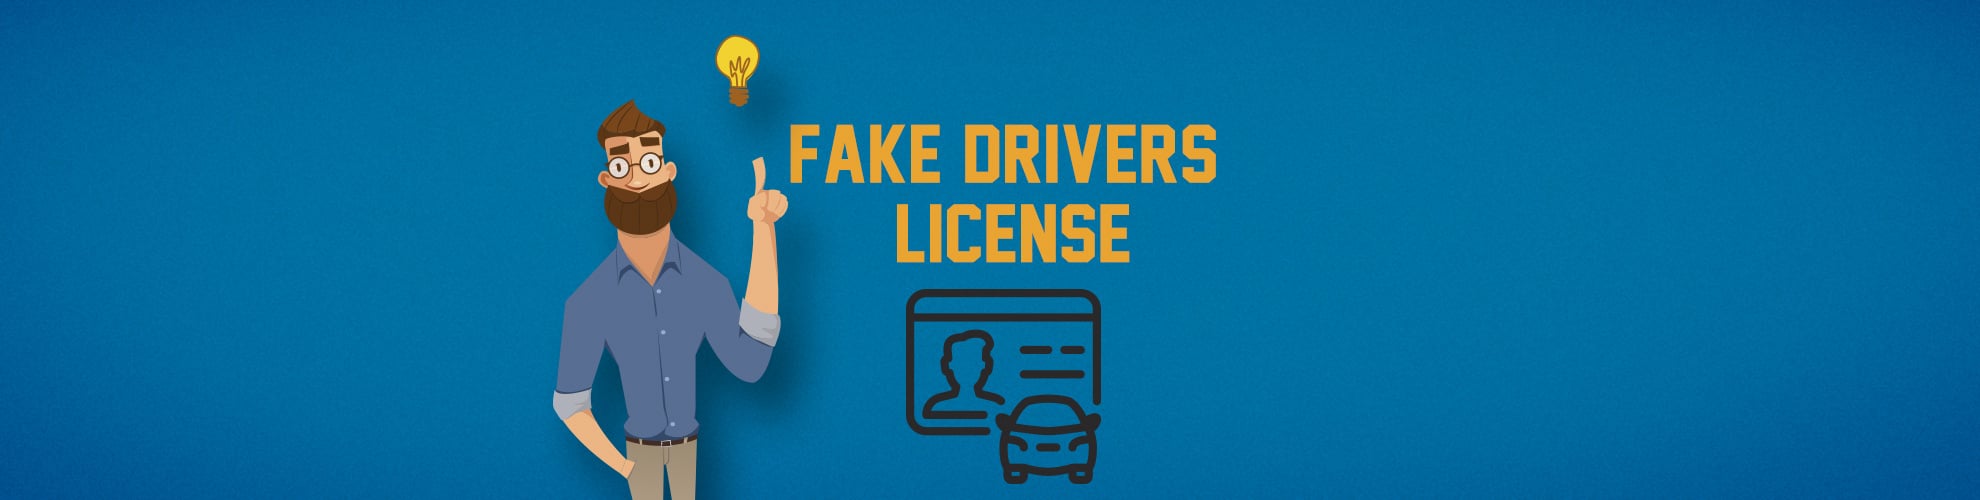 Fake Drivers License UK